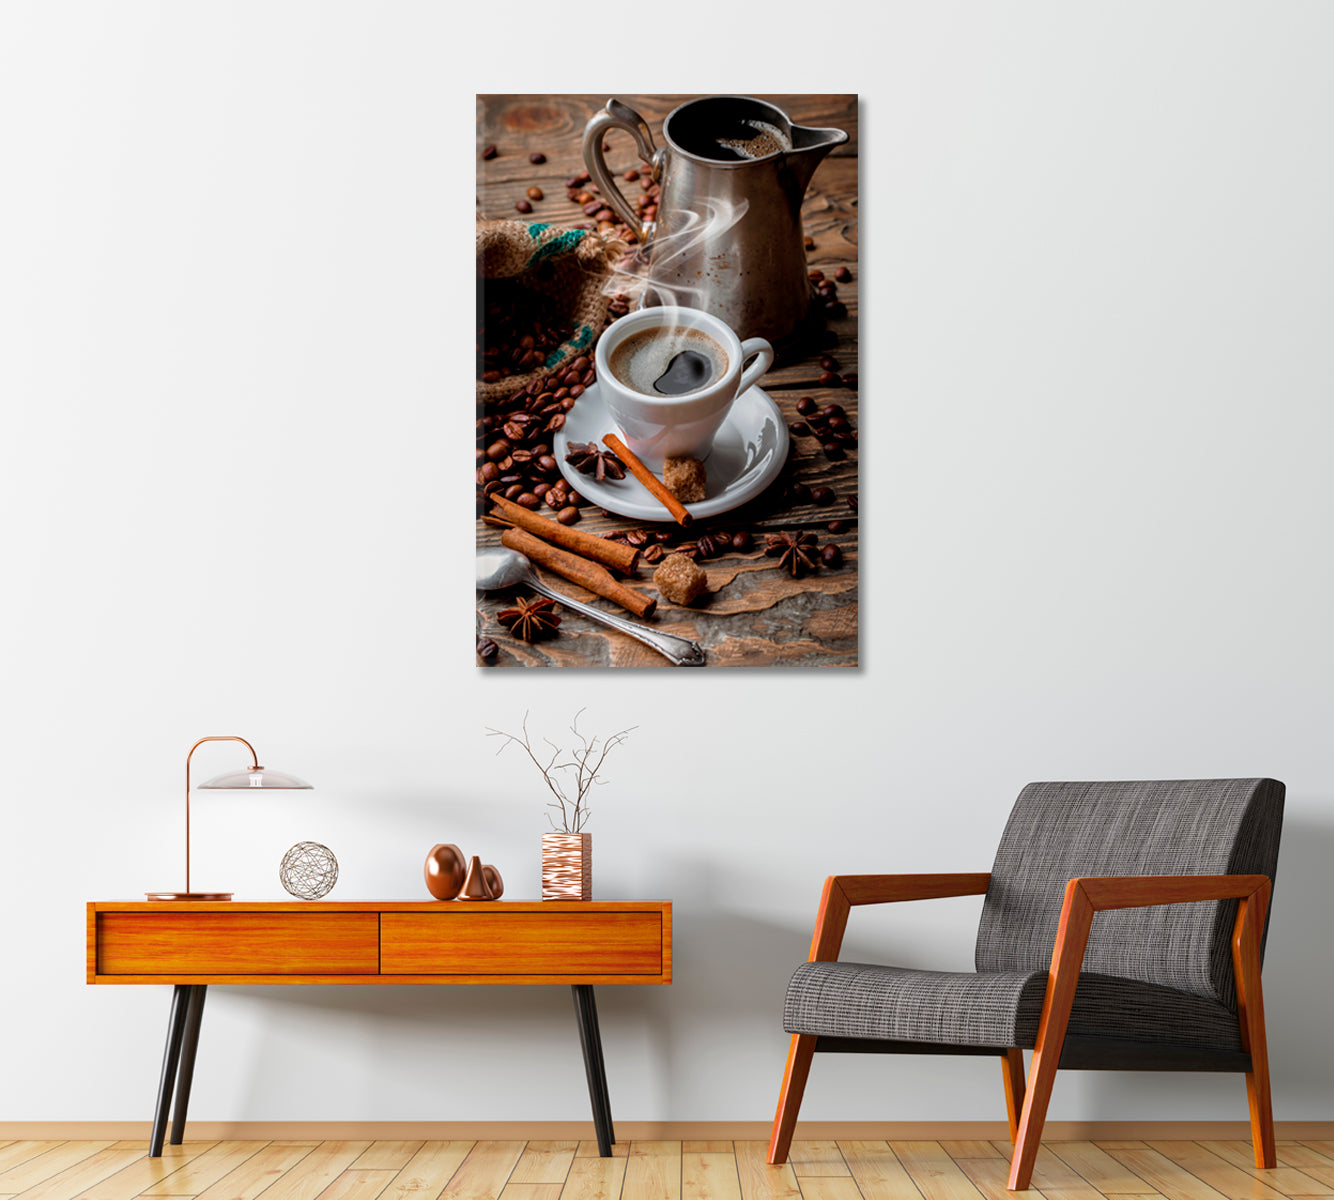 Black Coffee Art For Kitchen Wall-Canvas Print-CetArt-1 panel-16x24 inches-CetArt